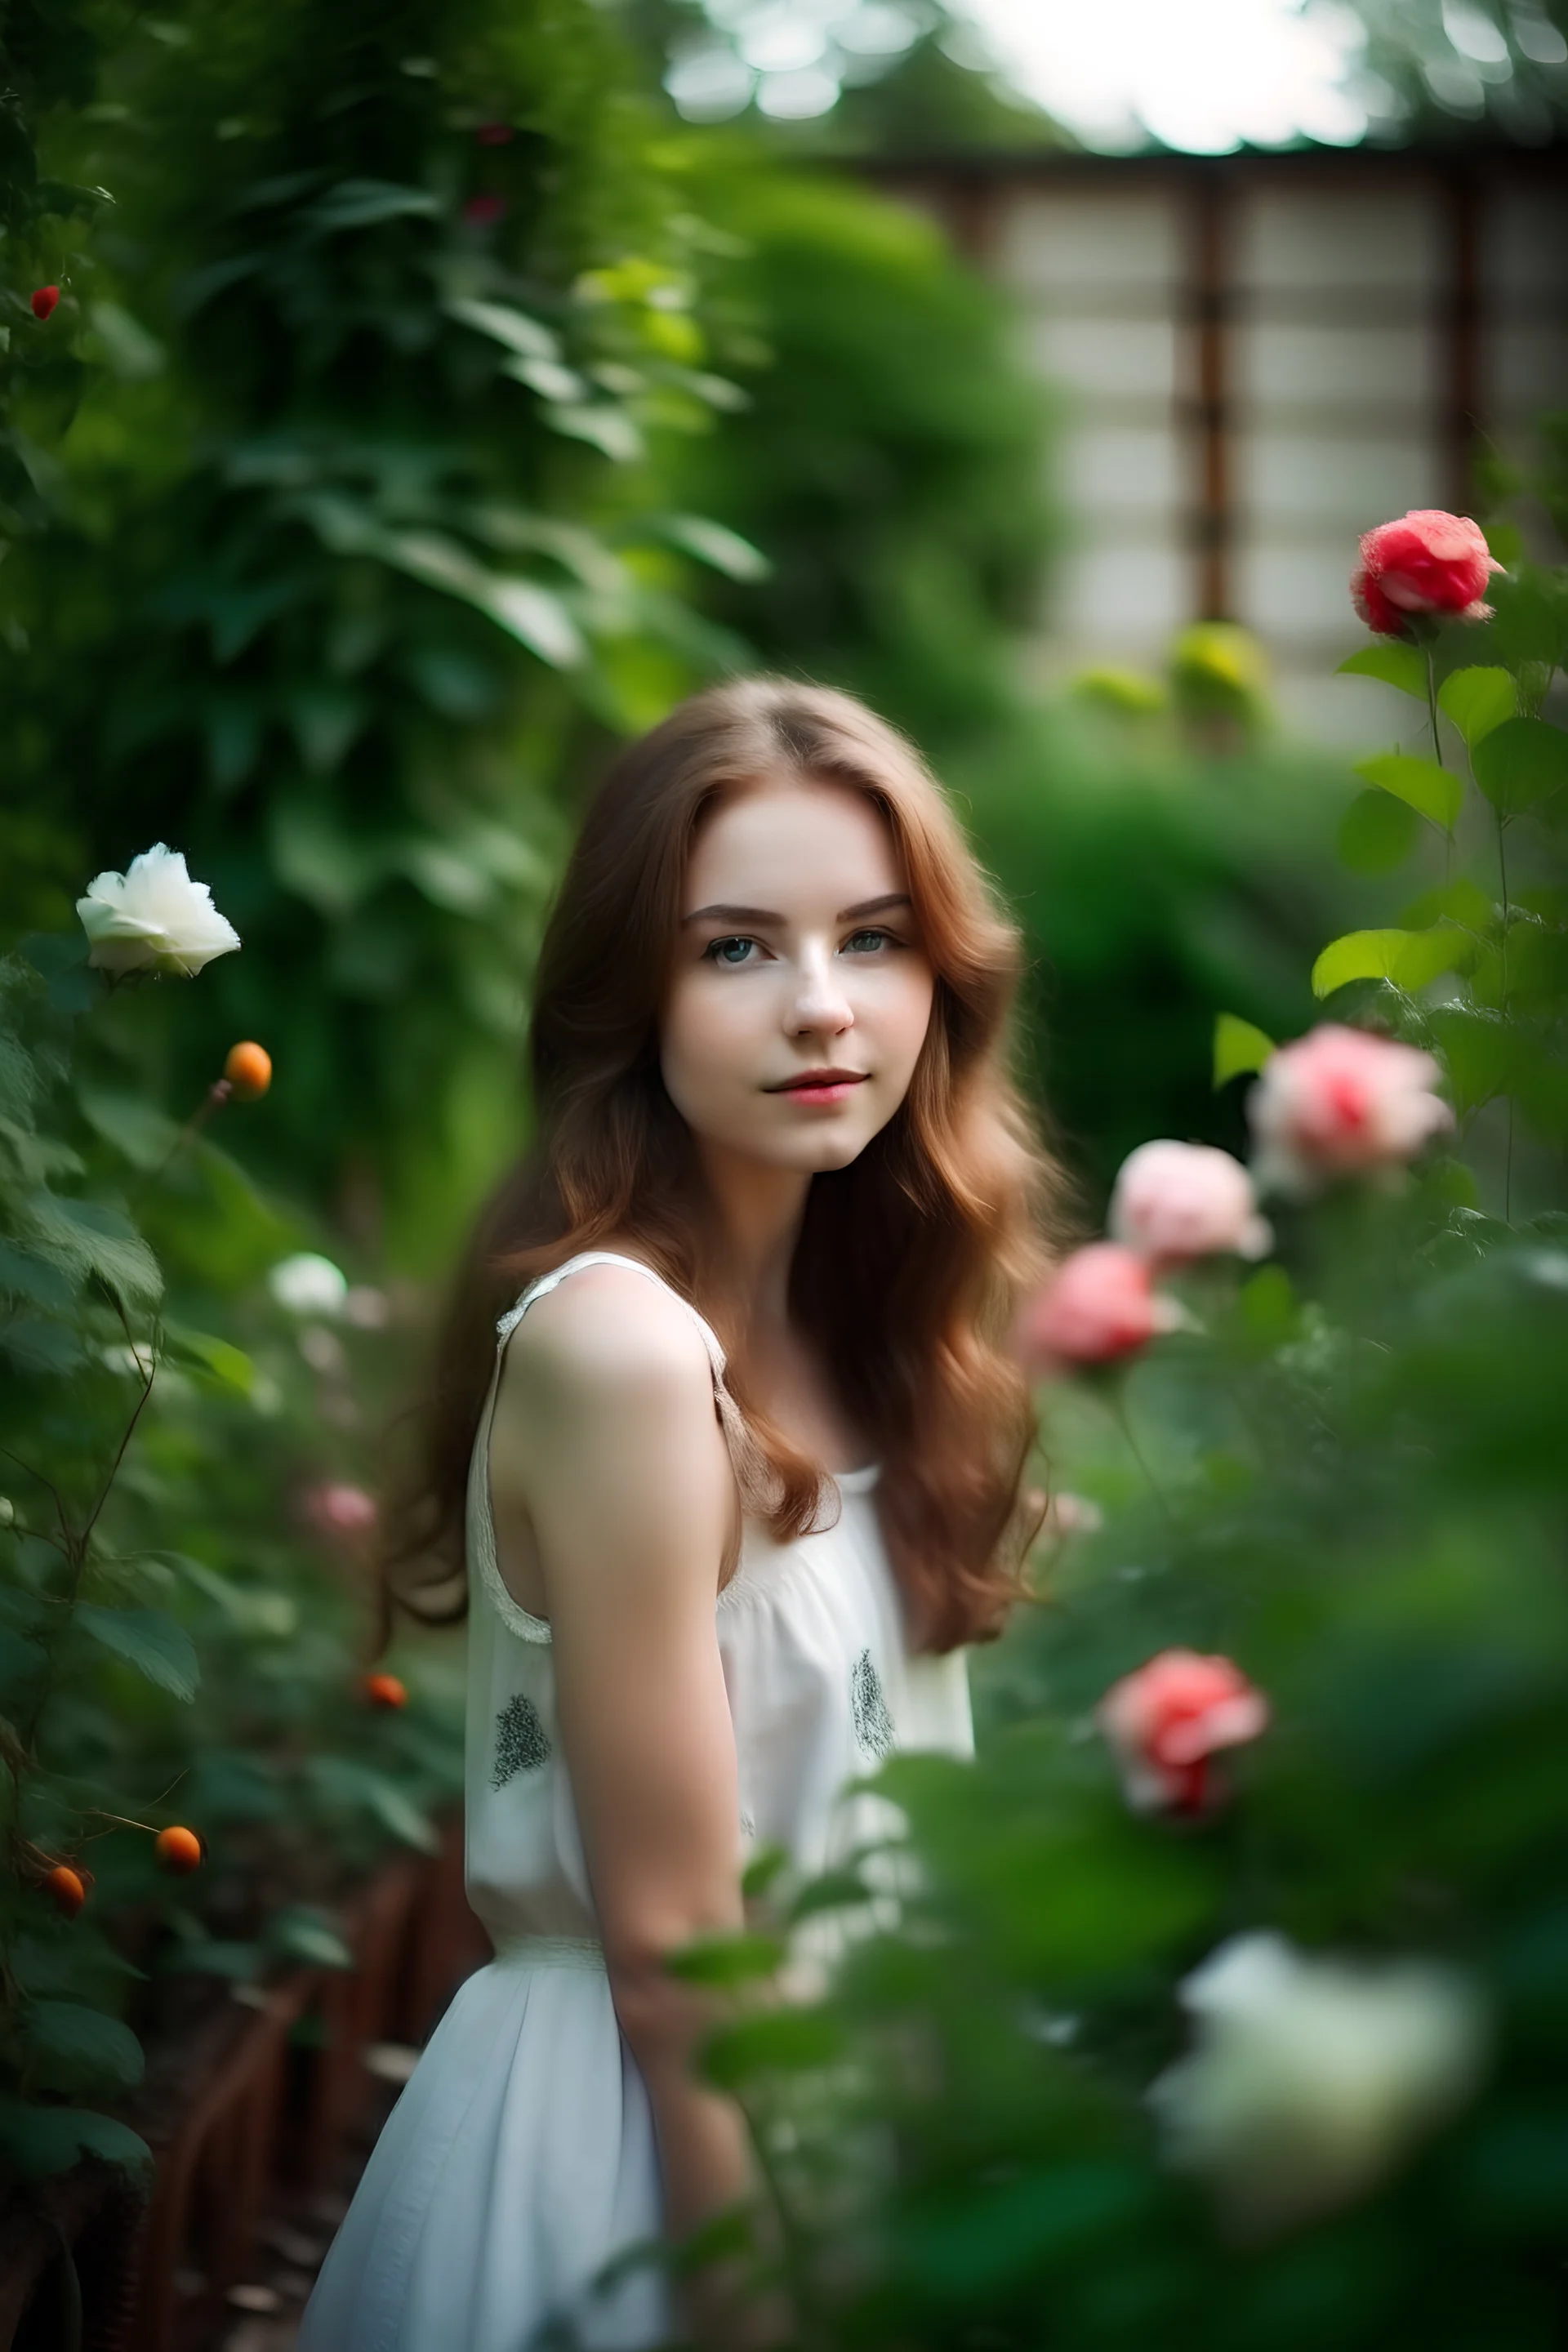 Beautiful Girl in the garden, 18 centure